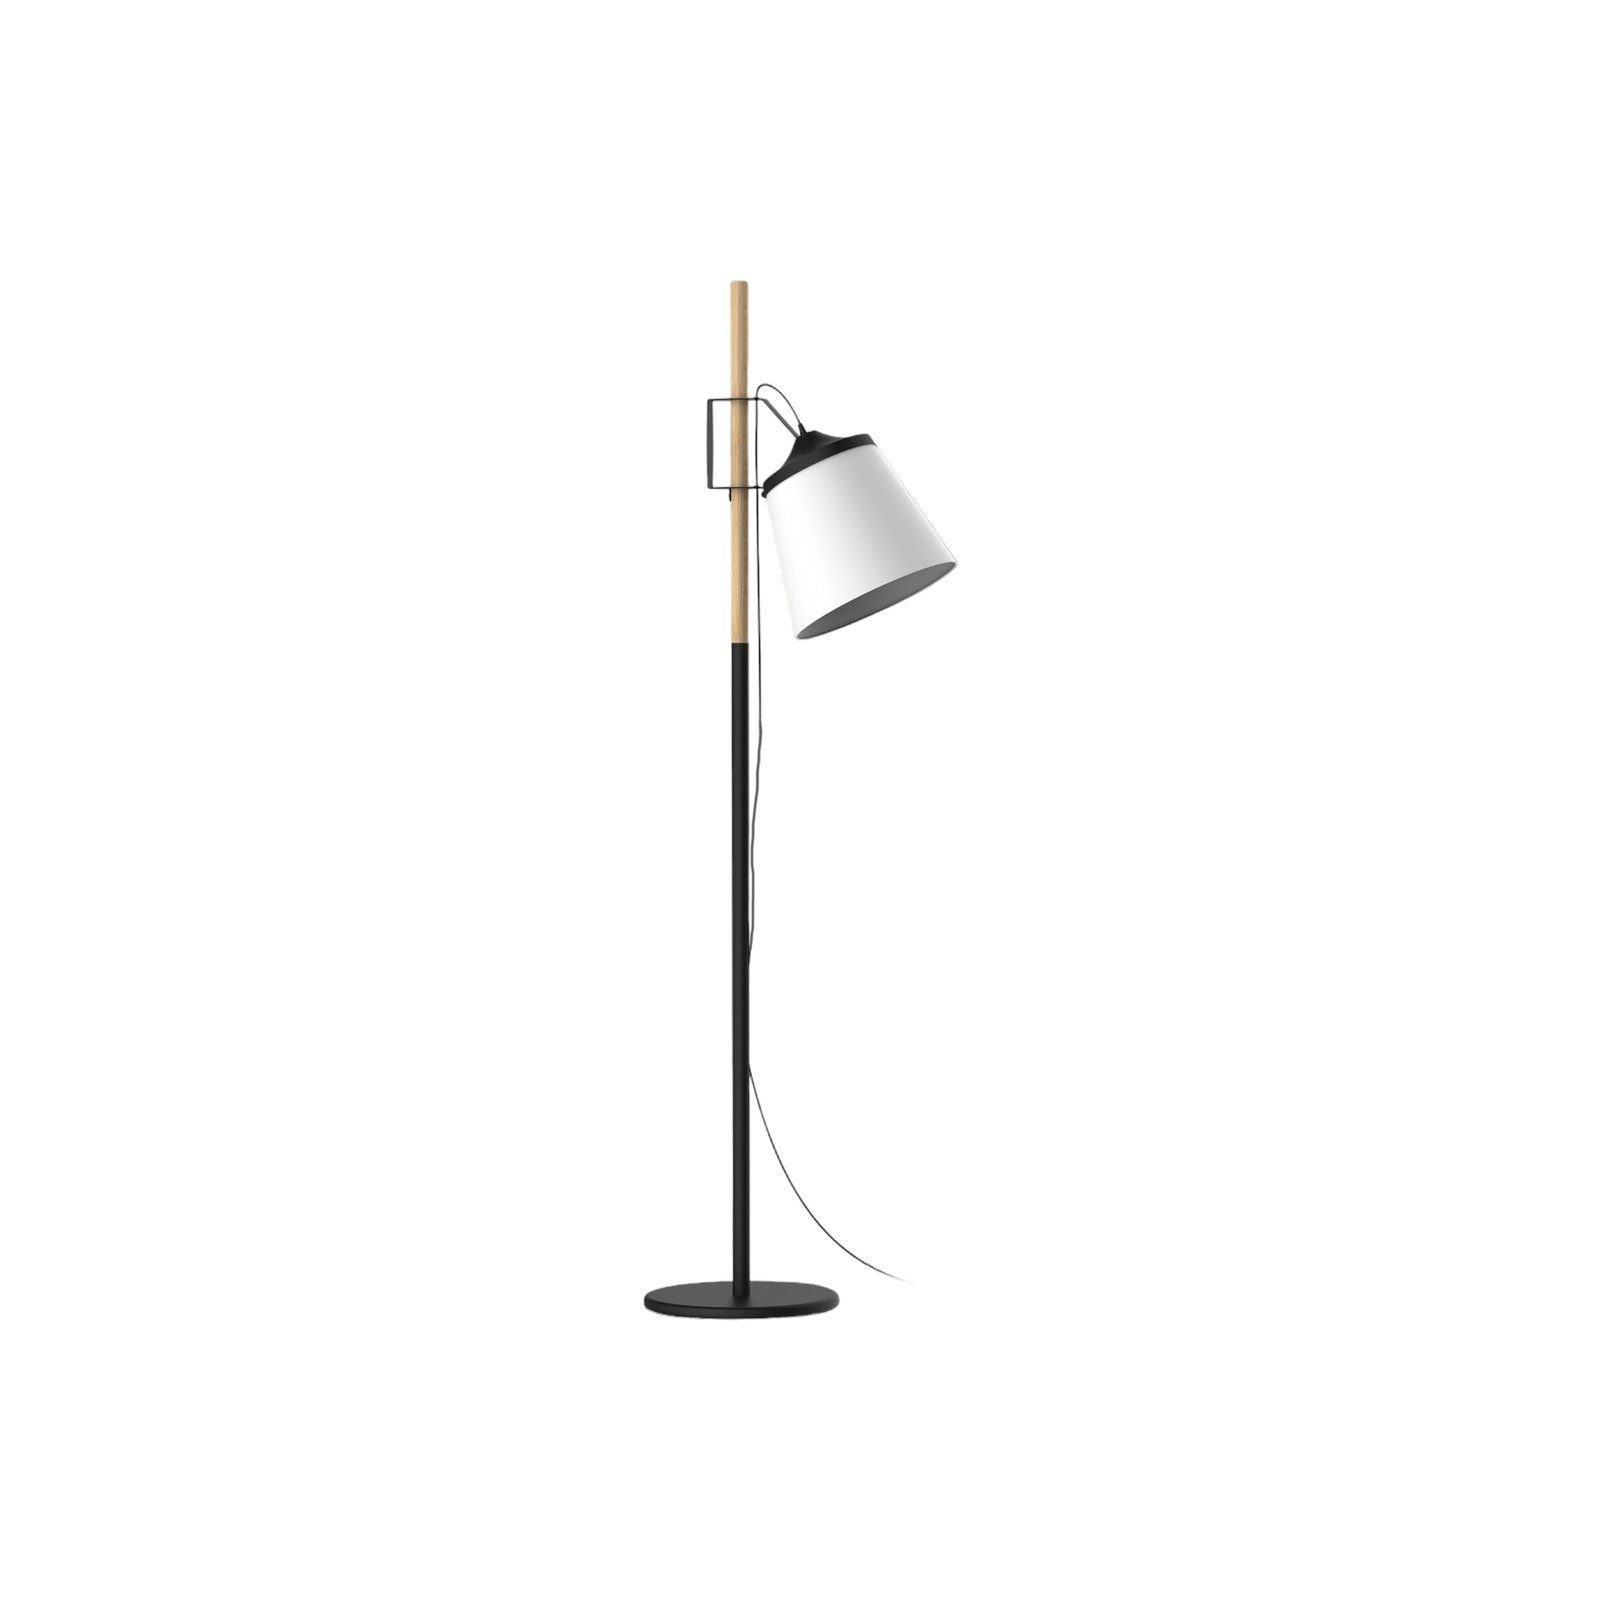 Aluminor Woody floor lamp, black/white/wood